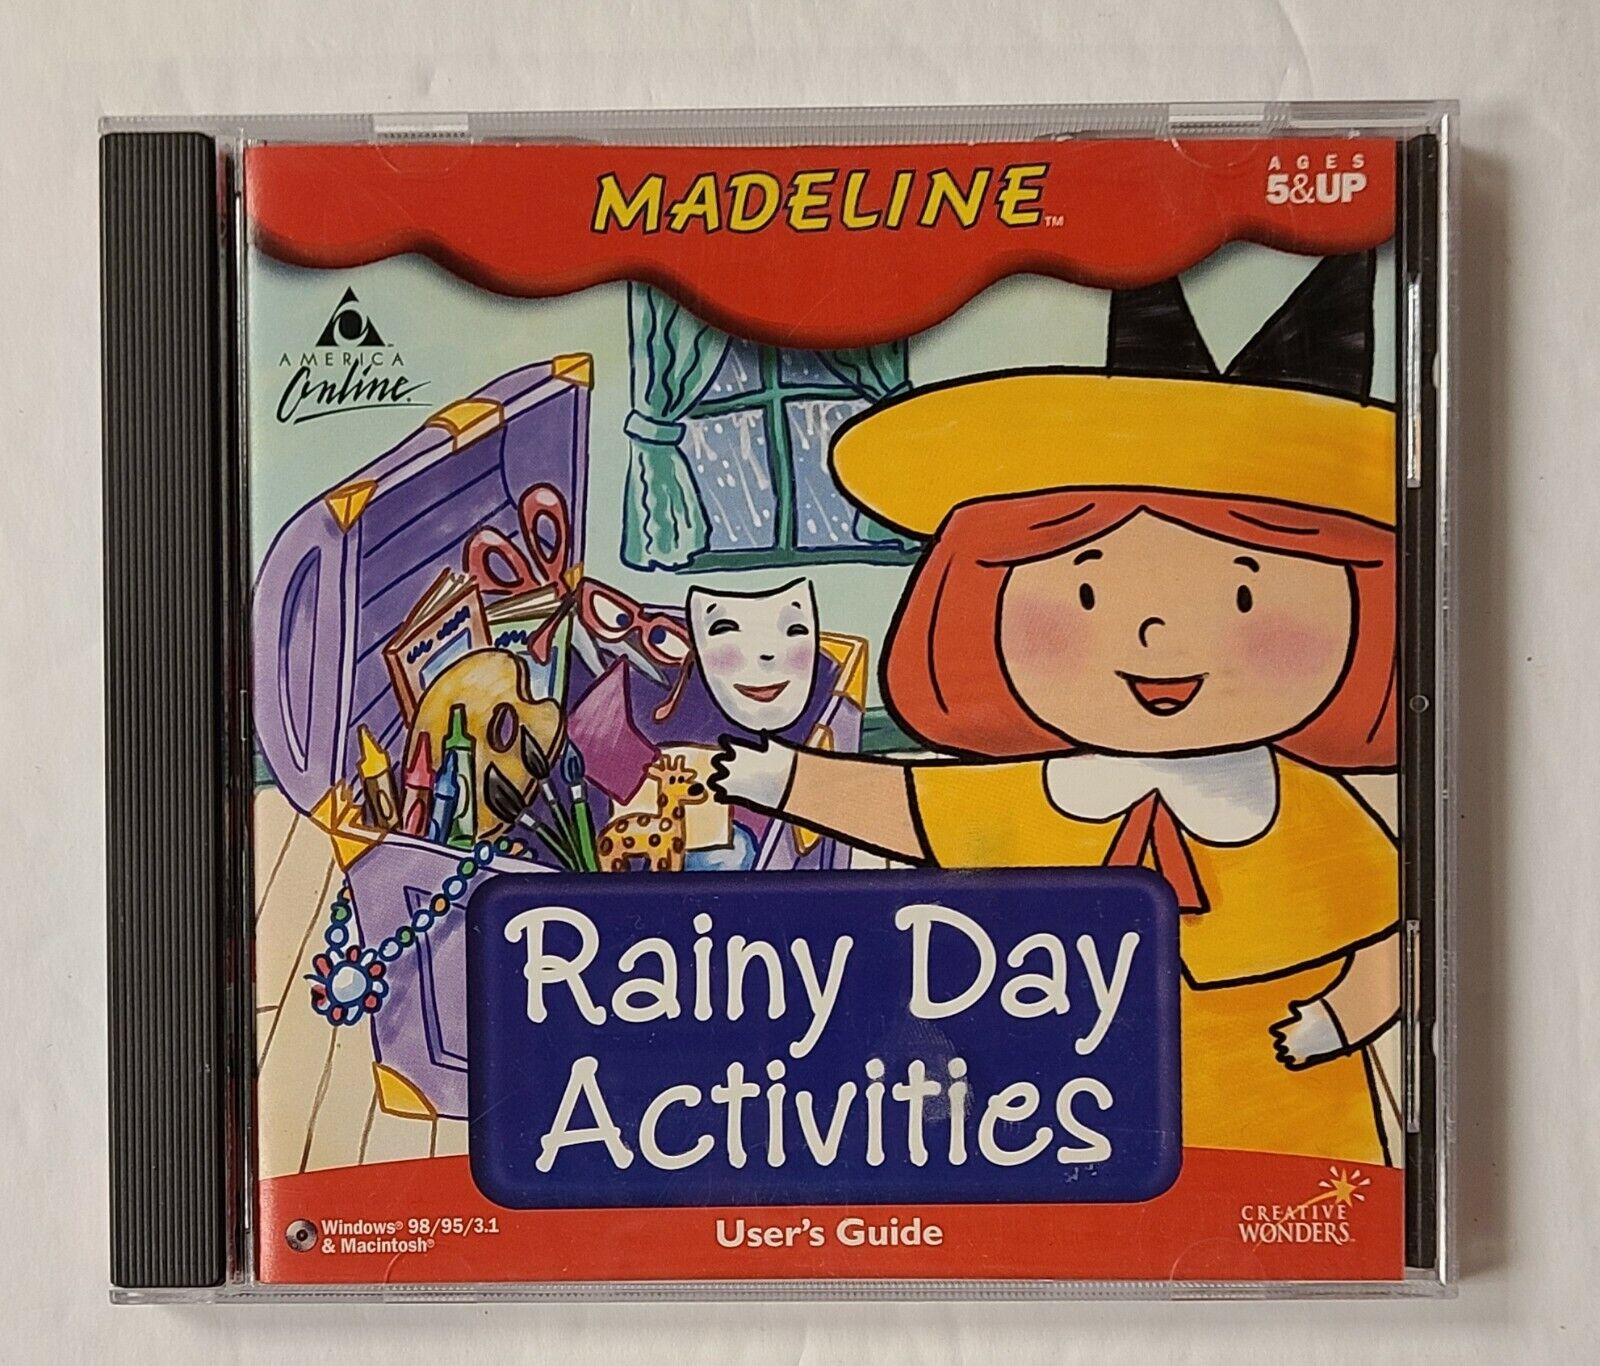 MADELINE Rainy Day Activities Creative Wonders, Windows 98/95/3.1 & Mac